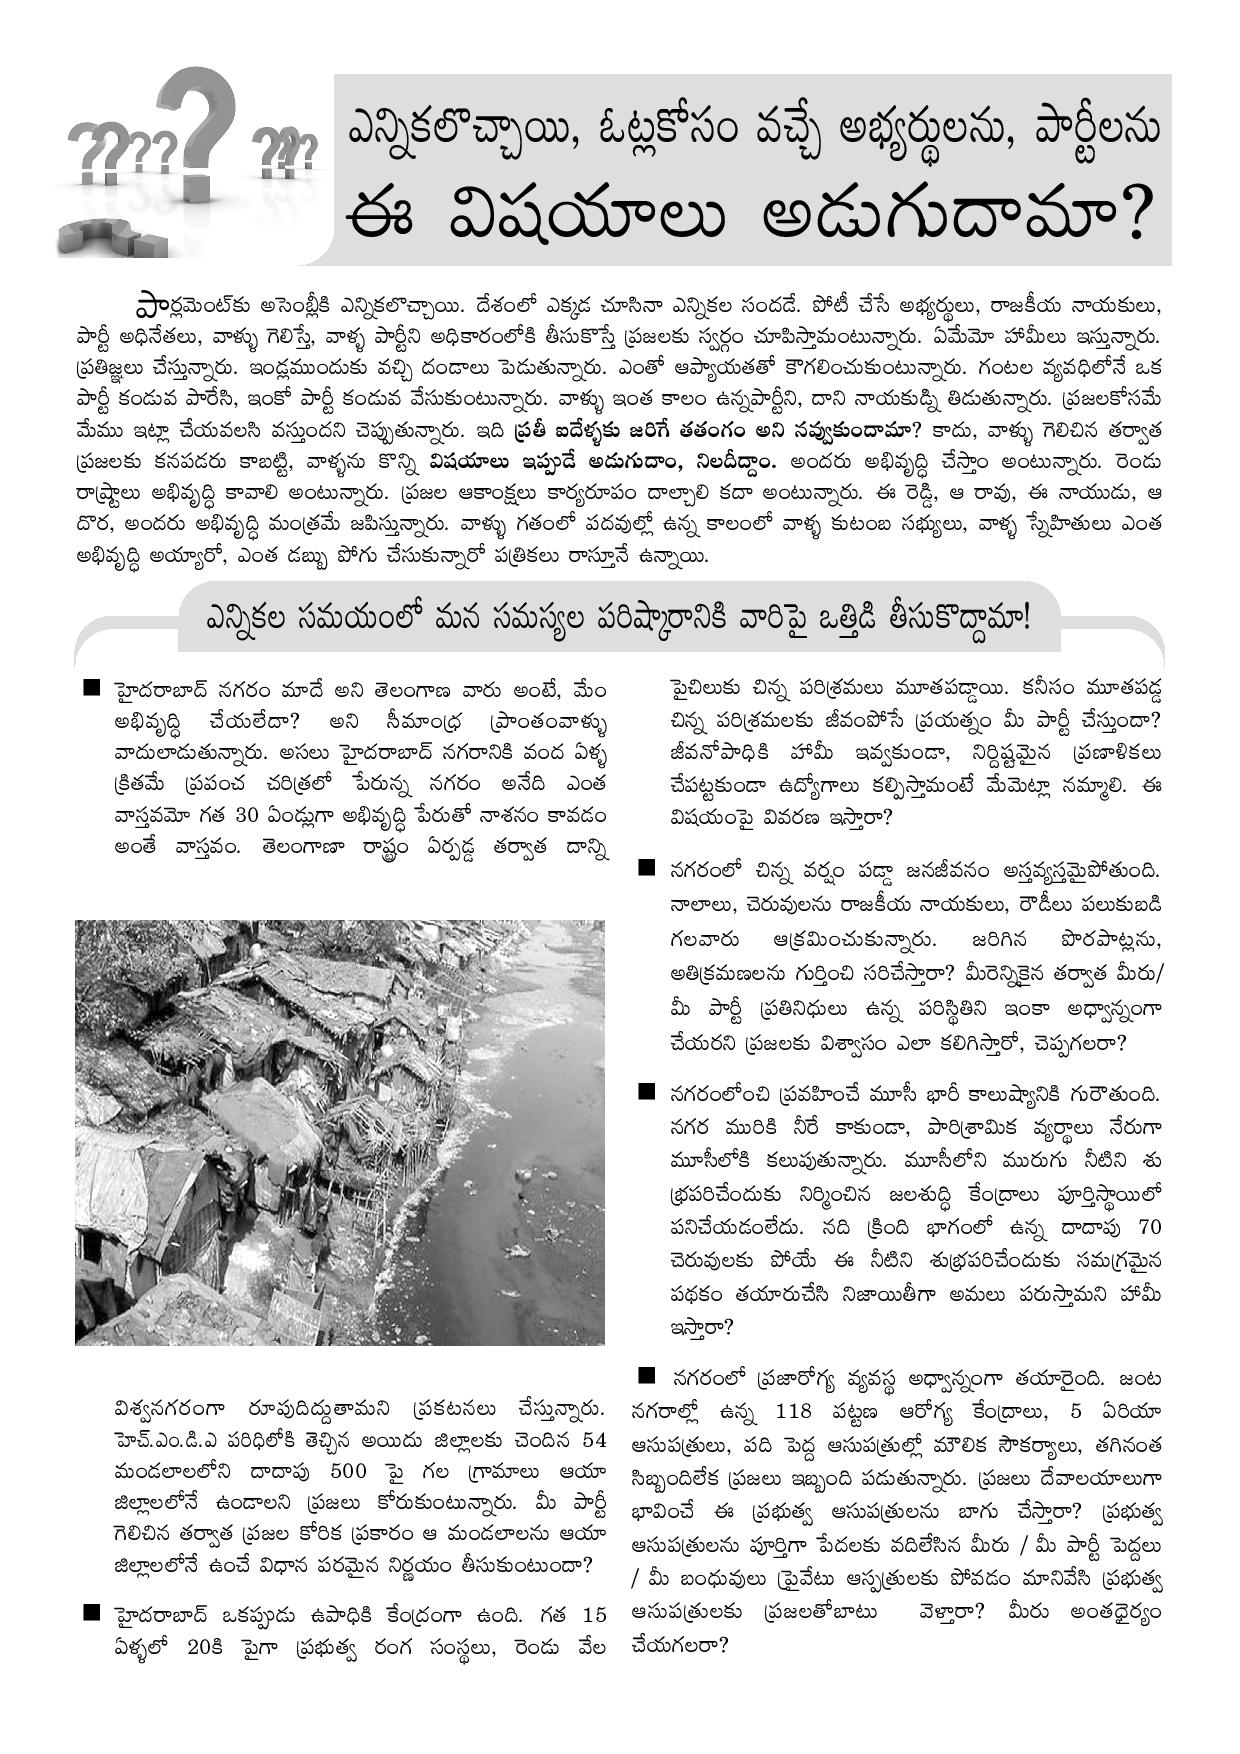 HRF,CITY UNIT Corrected karapatram 23.4.2014-page-001